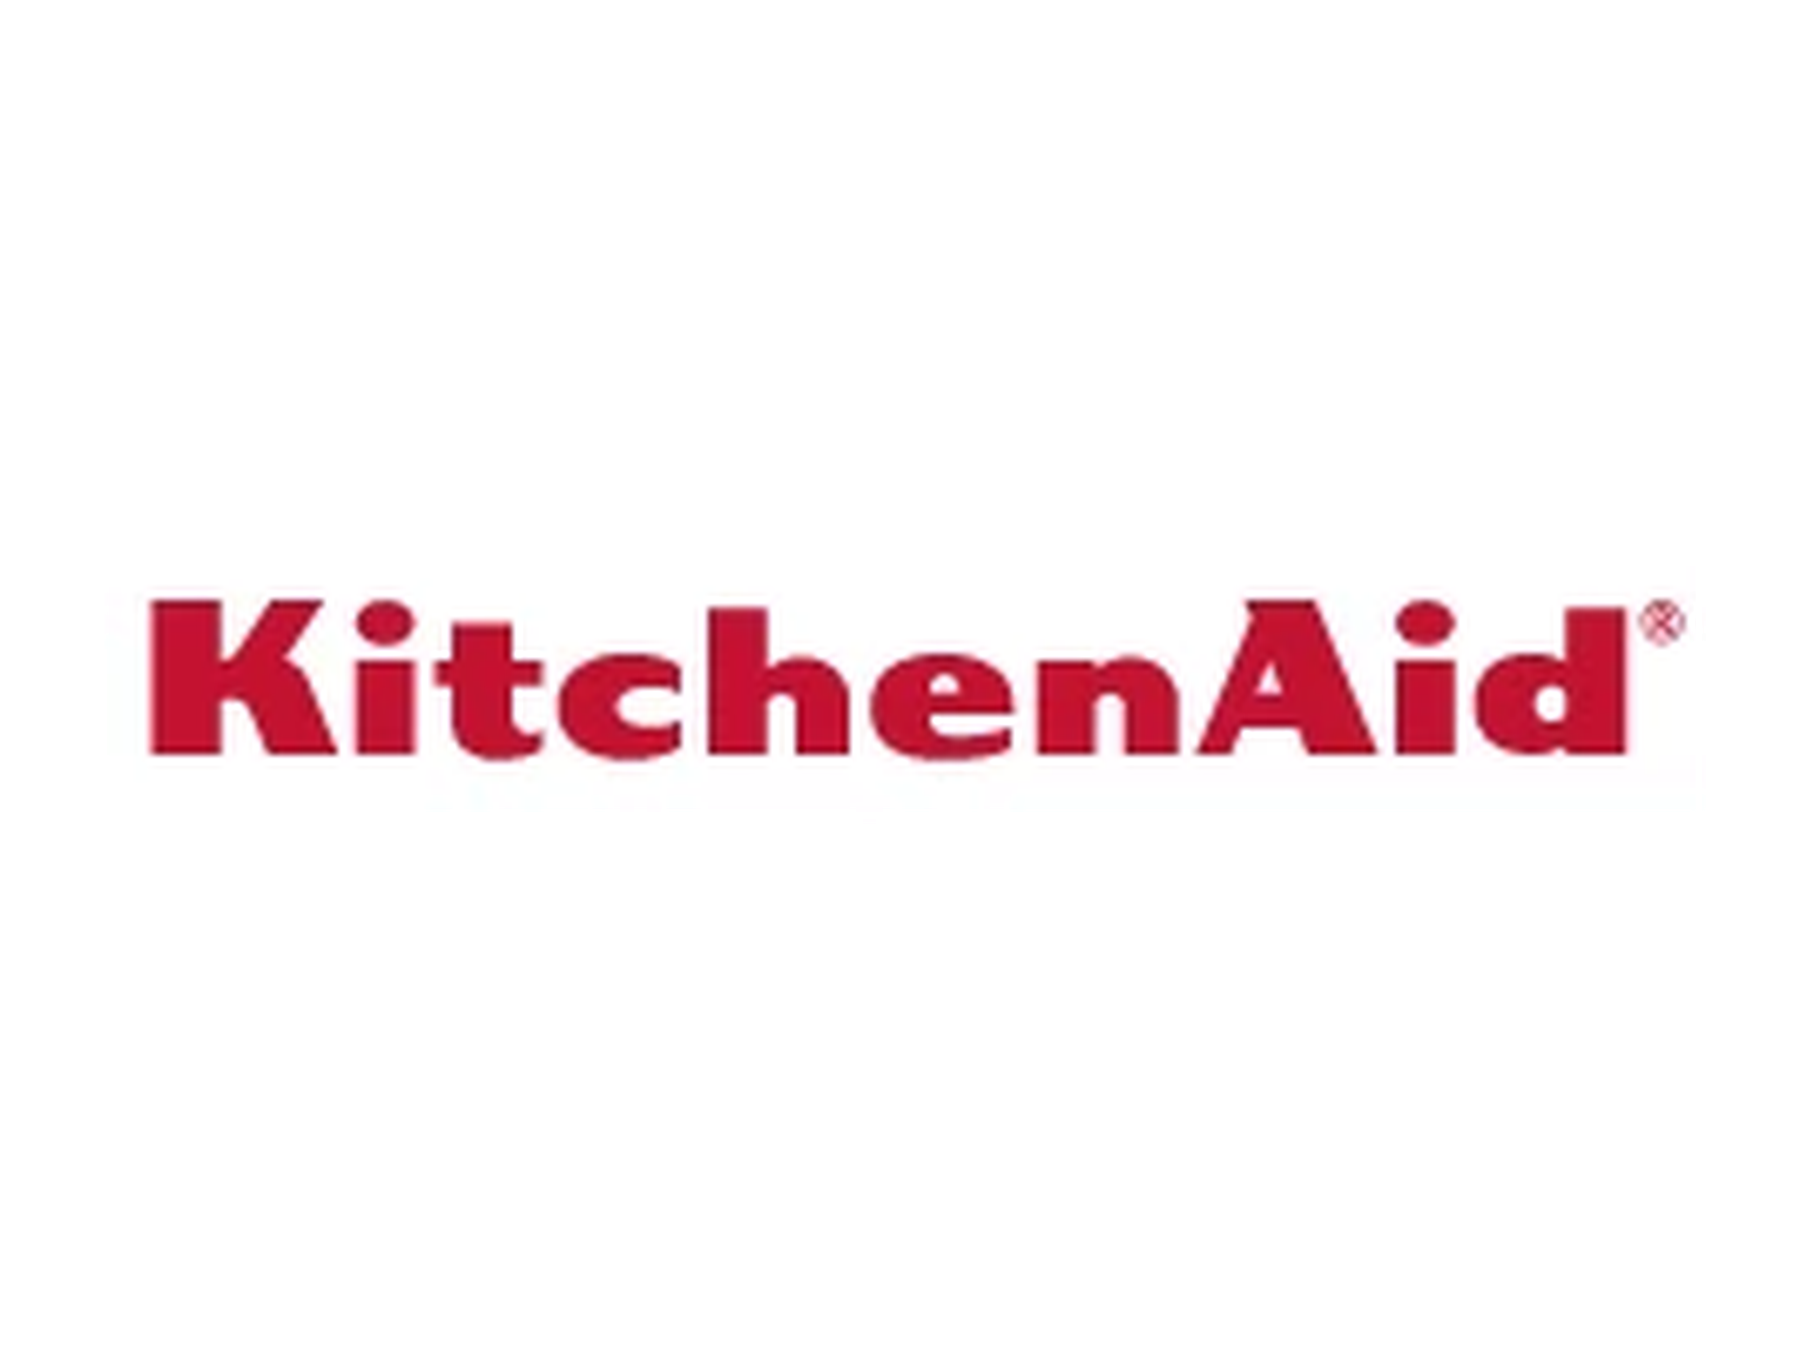 KitchenAid Discount Code